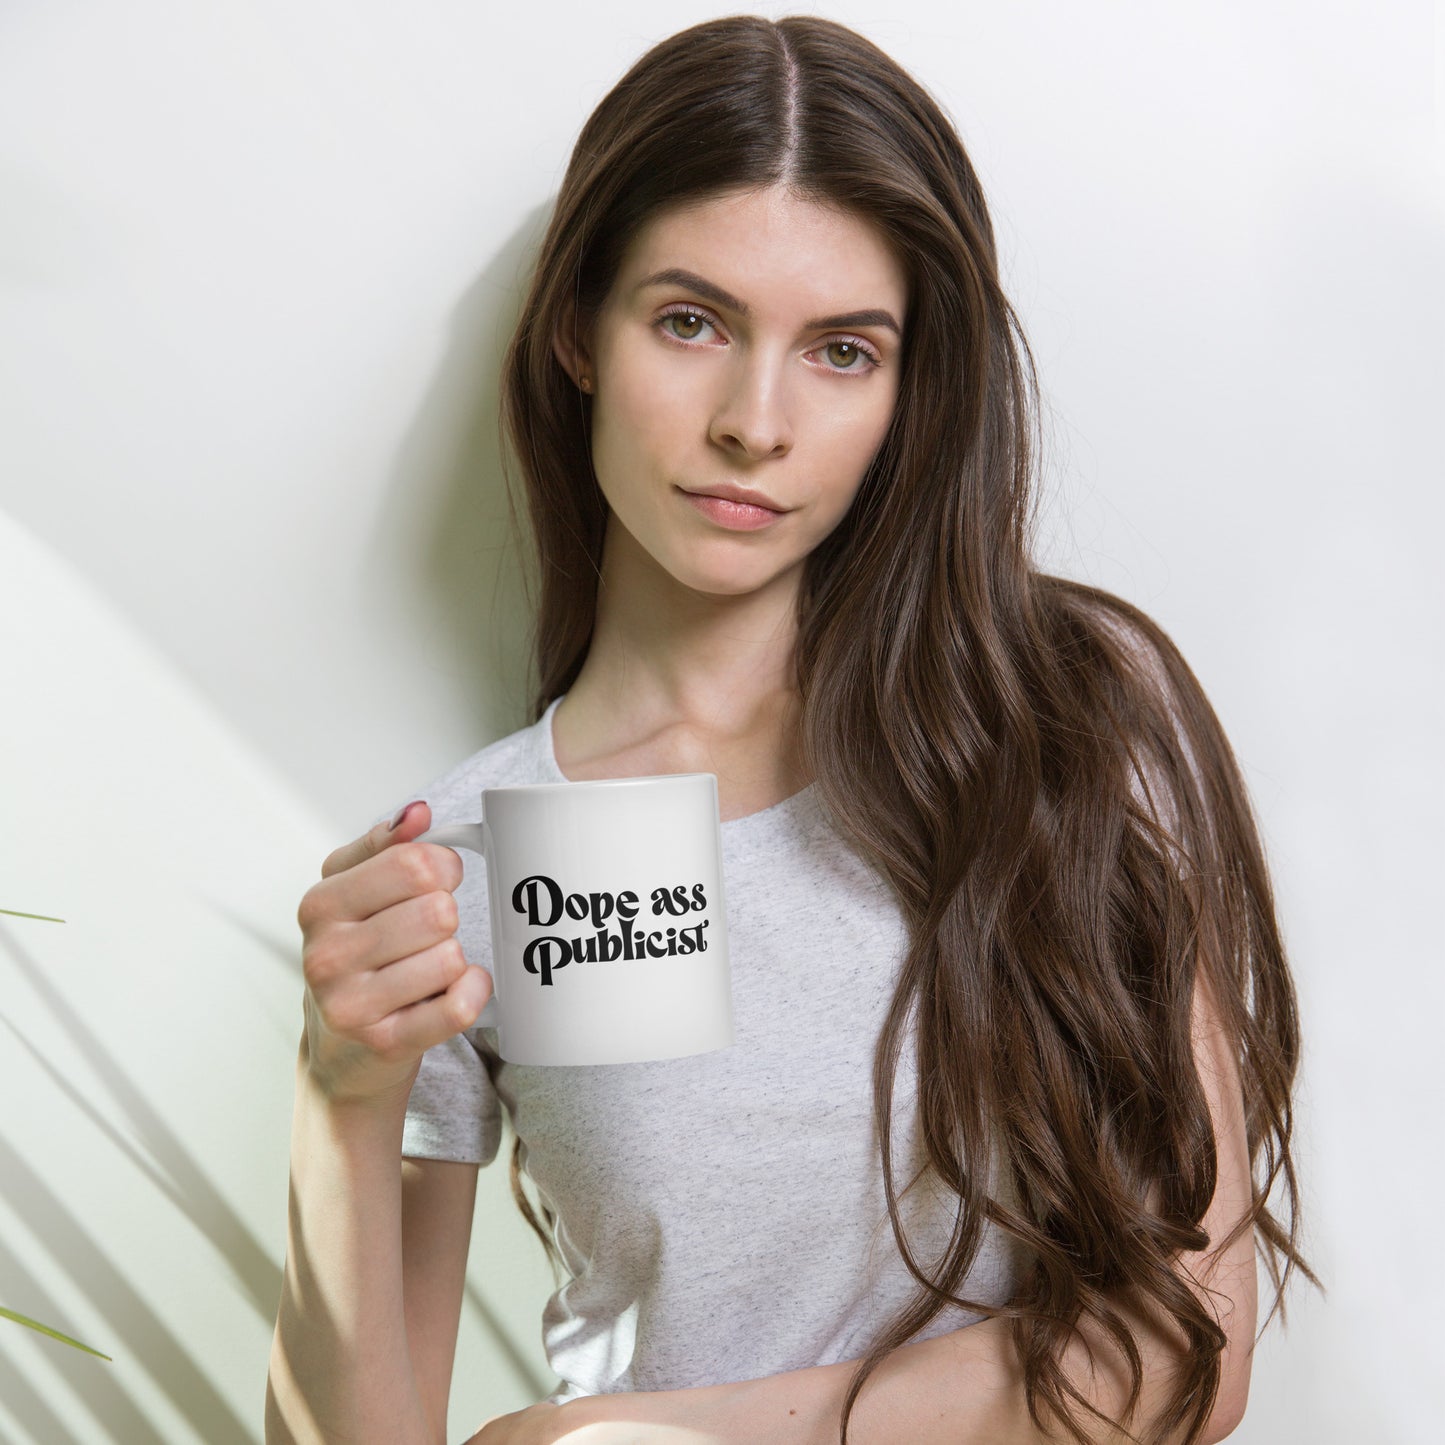 Dope Ass Publicist Printed White glossy mug